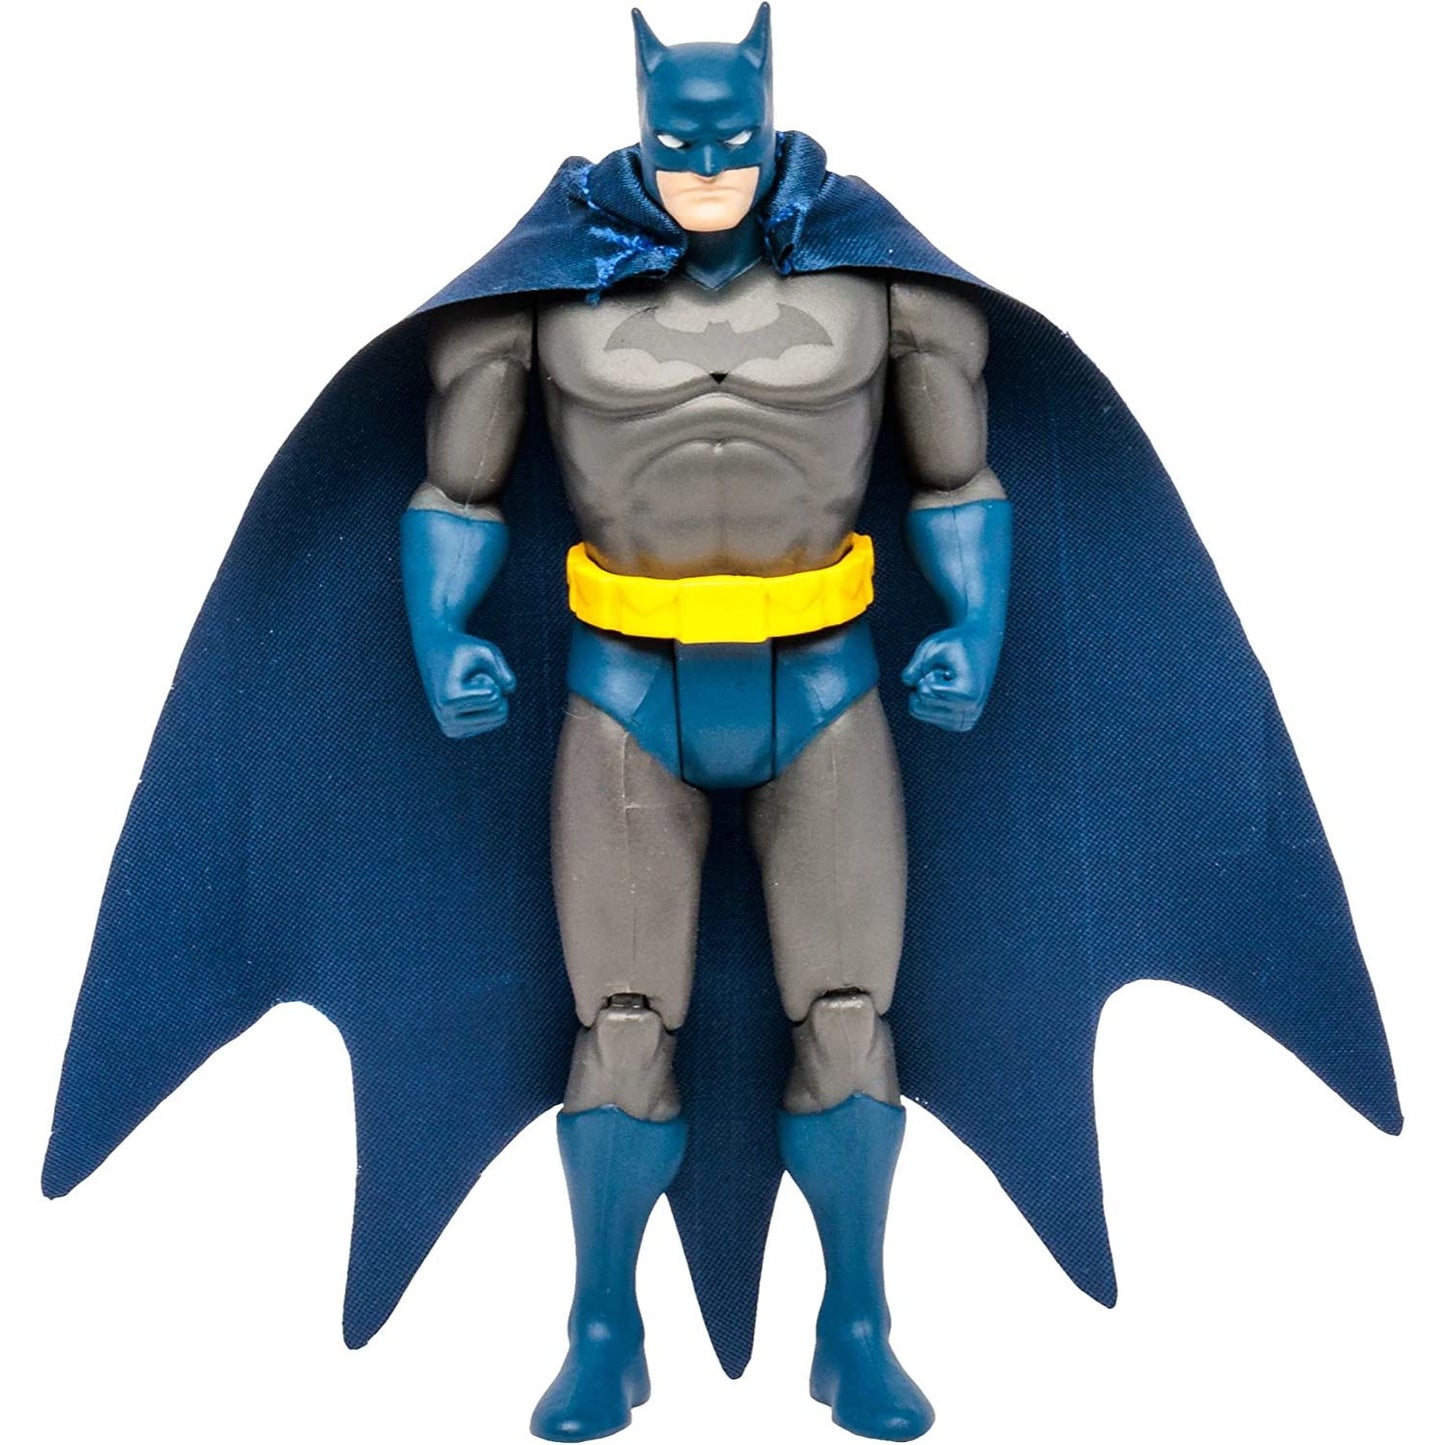 DC Direct - Super Powers - Hush Batman Figure - Heretoserveyou